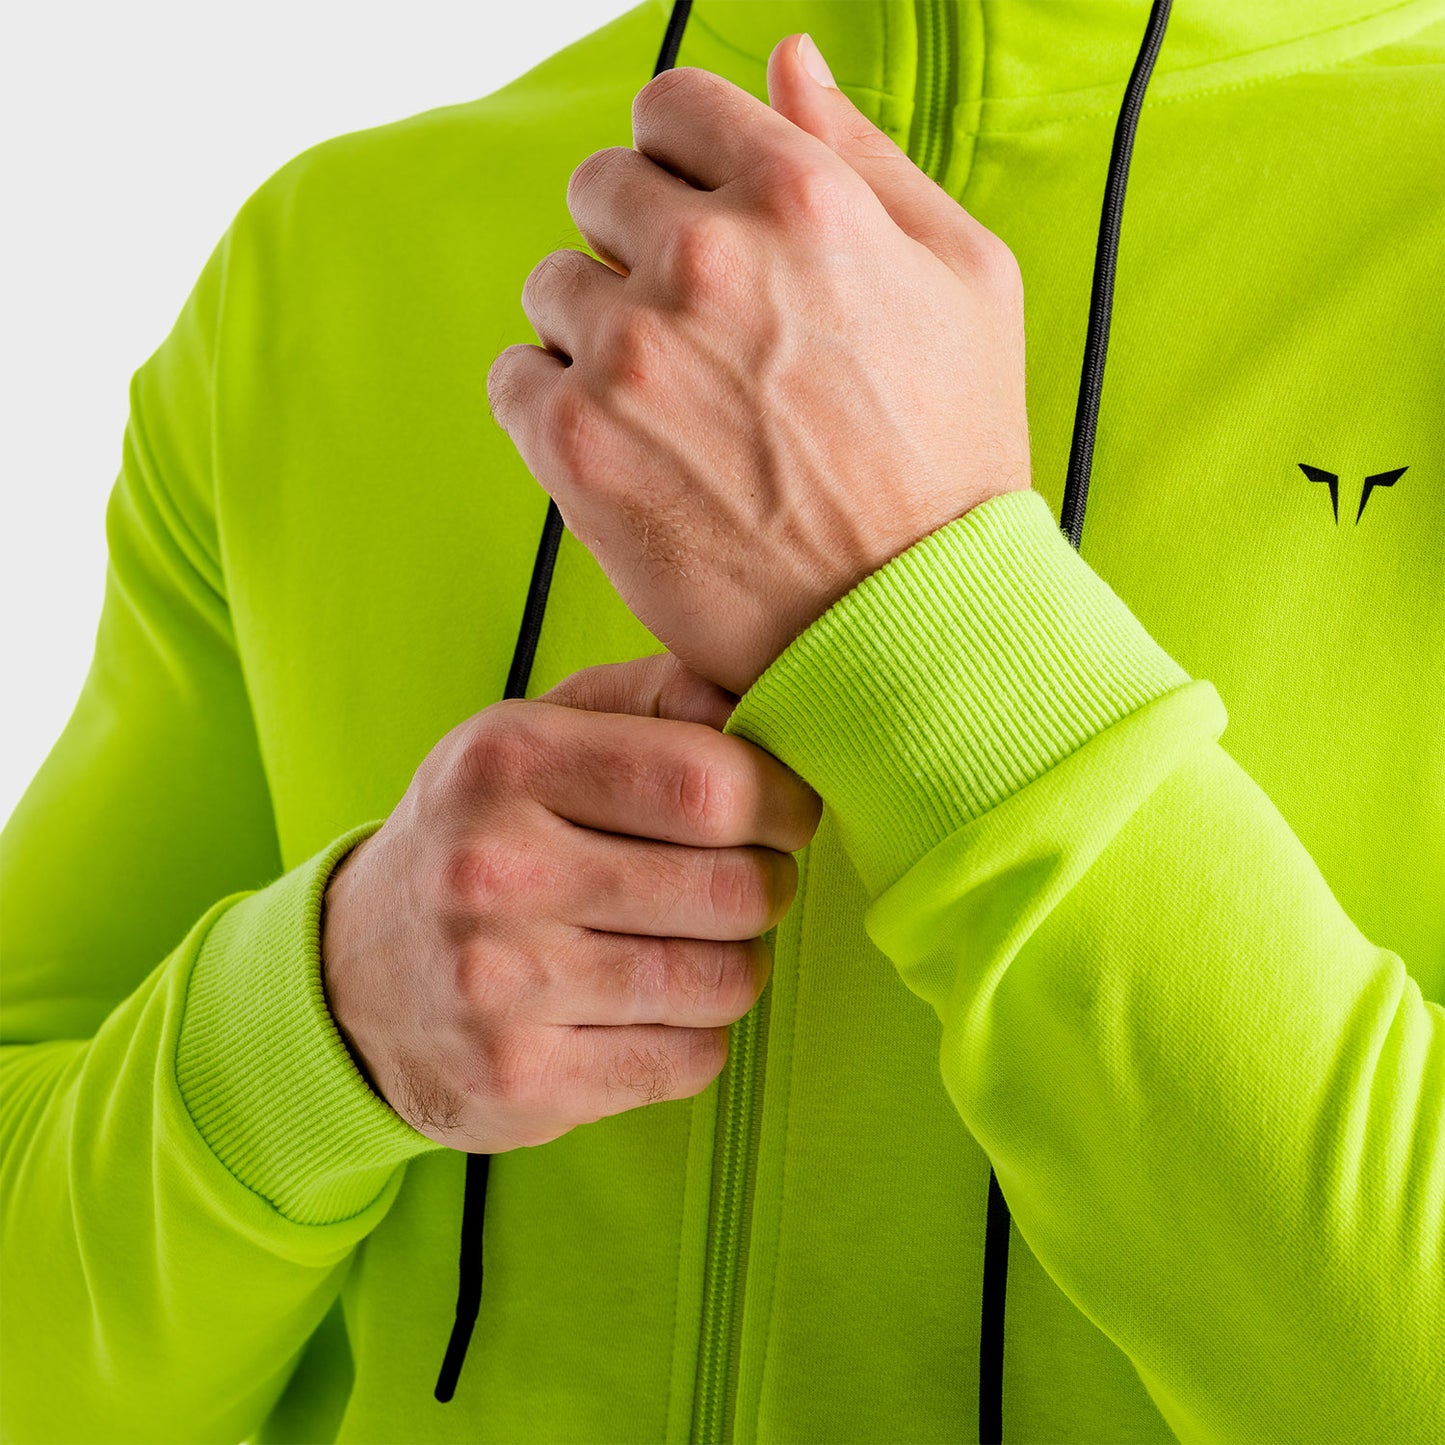 squatwolf-workout-hoodies-for-men-core-zip-up-neon-gym-wear